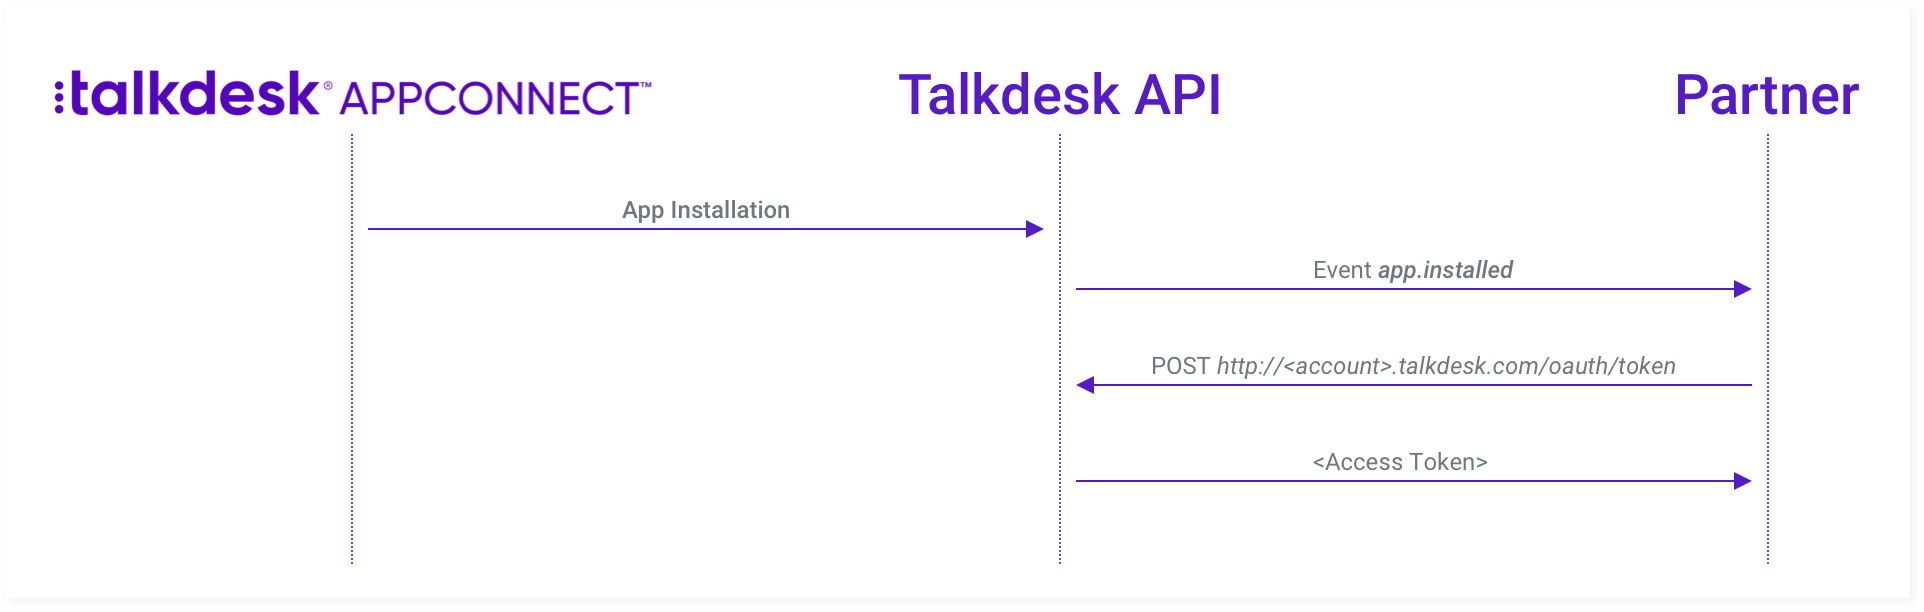 Figure 1 - Accessing the Talkdesk APIs